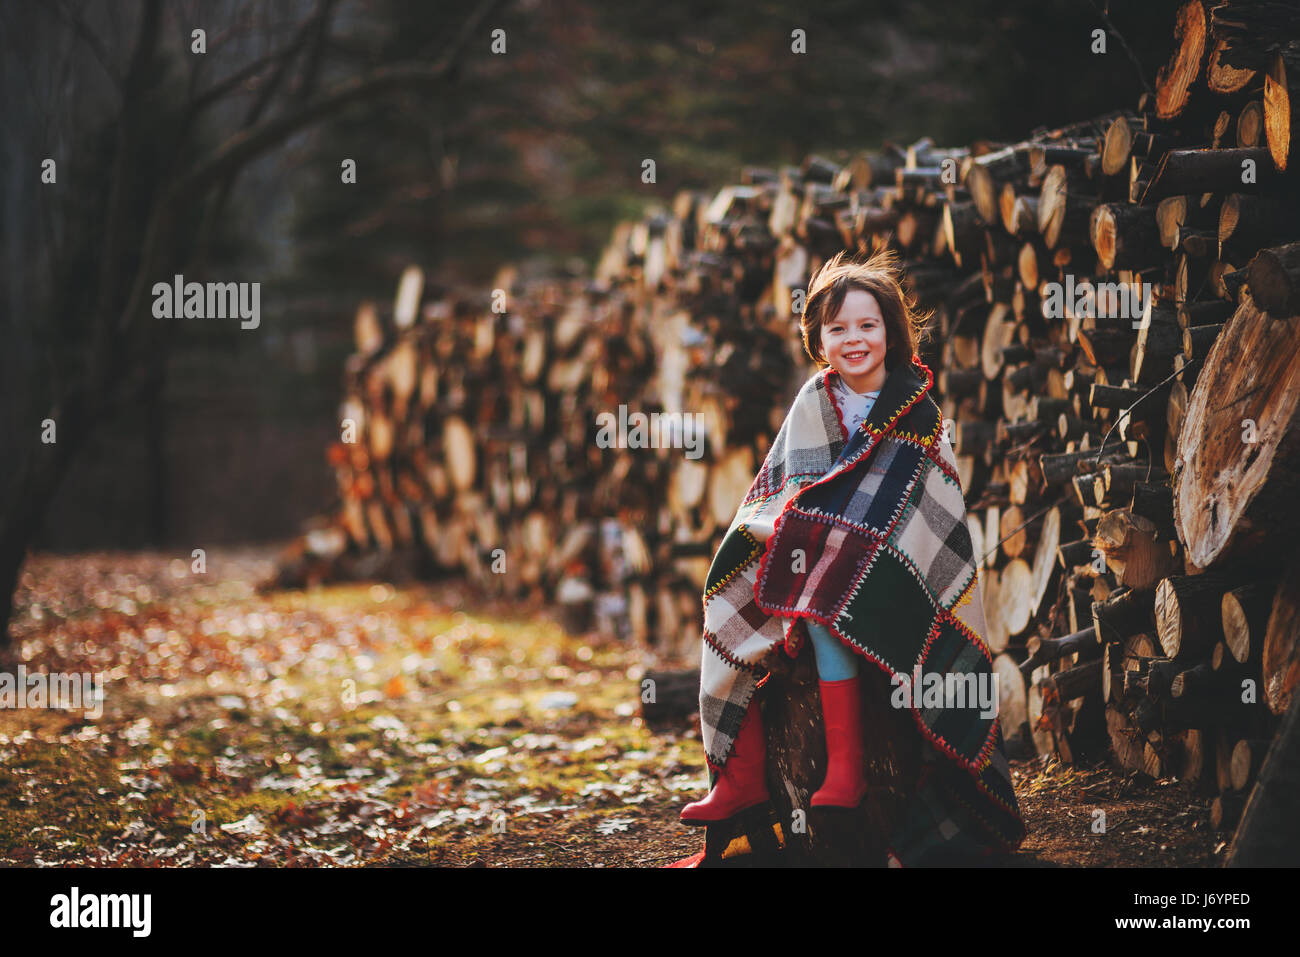 Chica sentada por log pile envuelto en Manta Foto de stock